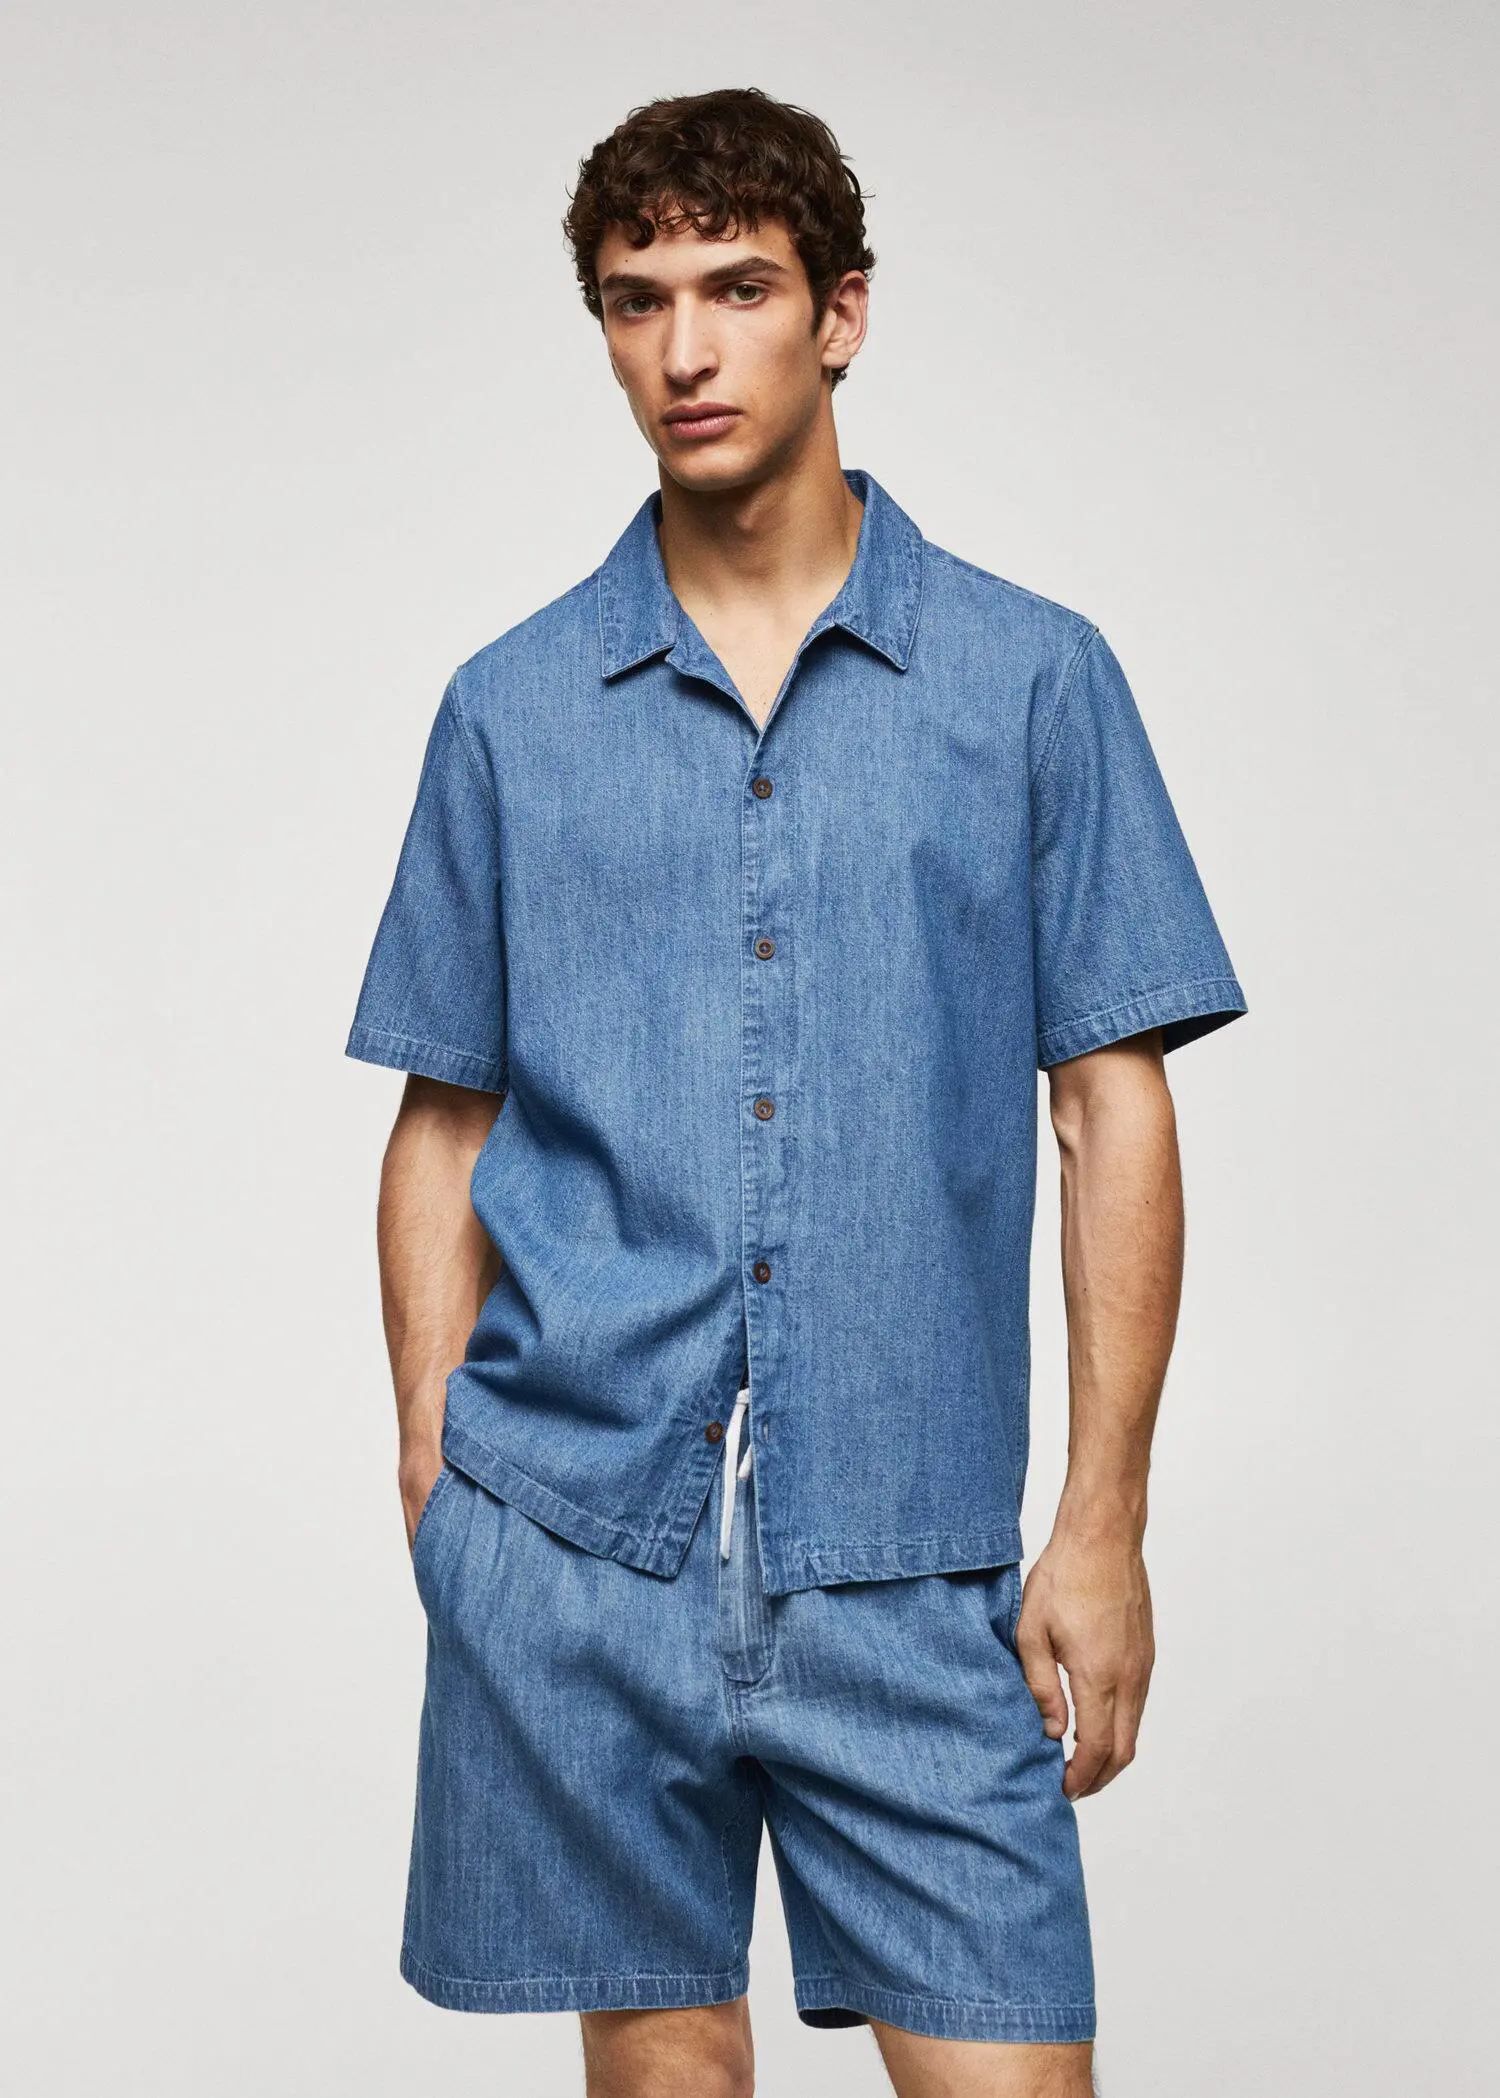 Mango 100% cotton chambray shirt. a man wearing a blue shirt and shorts. 